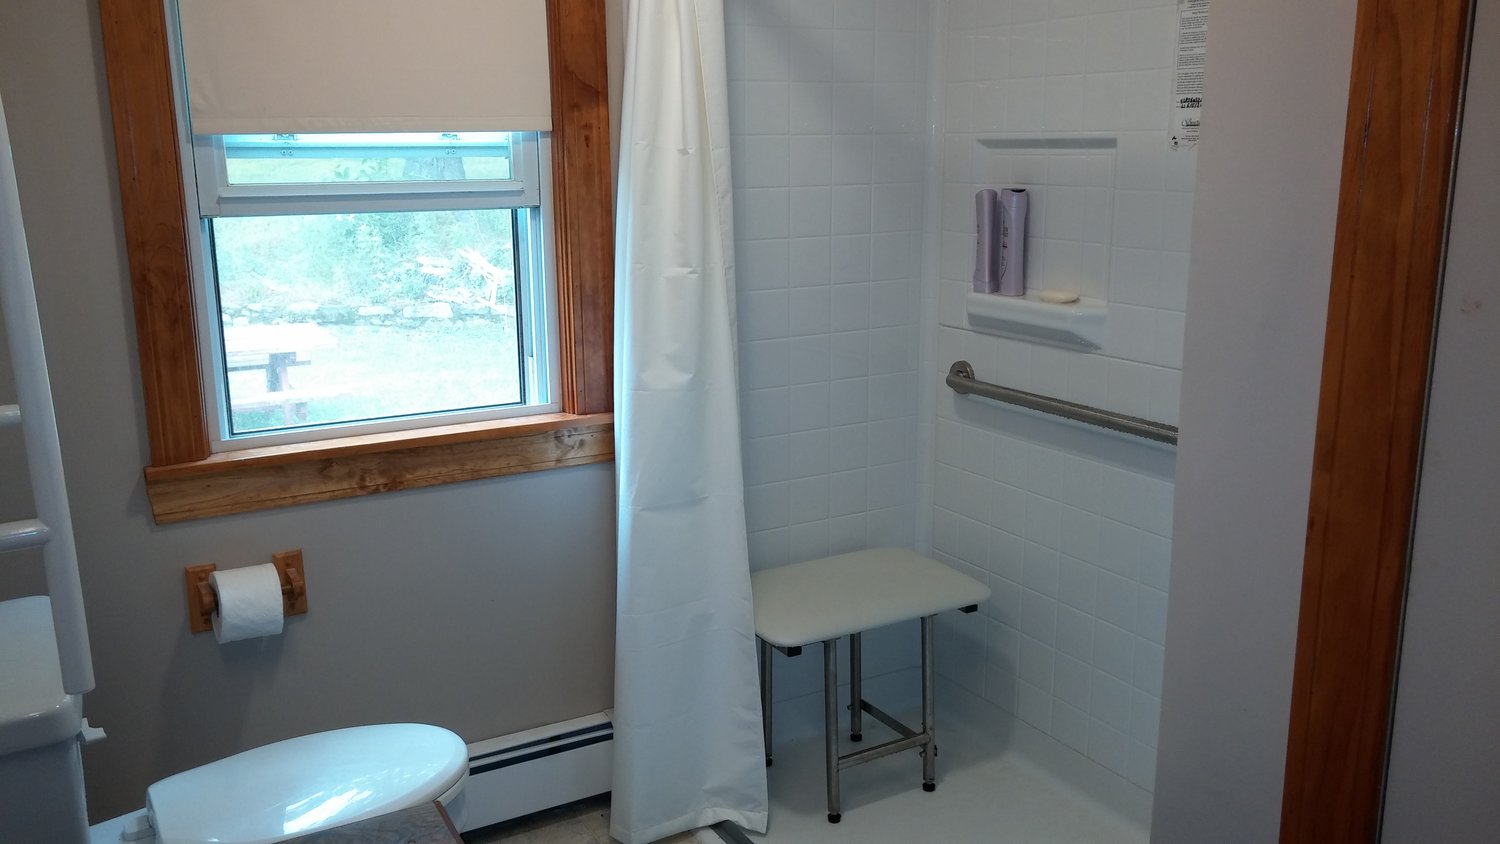 ADA Bathroom Renovation/Remodeling Project - Auburn MA 